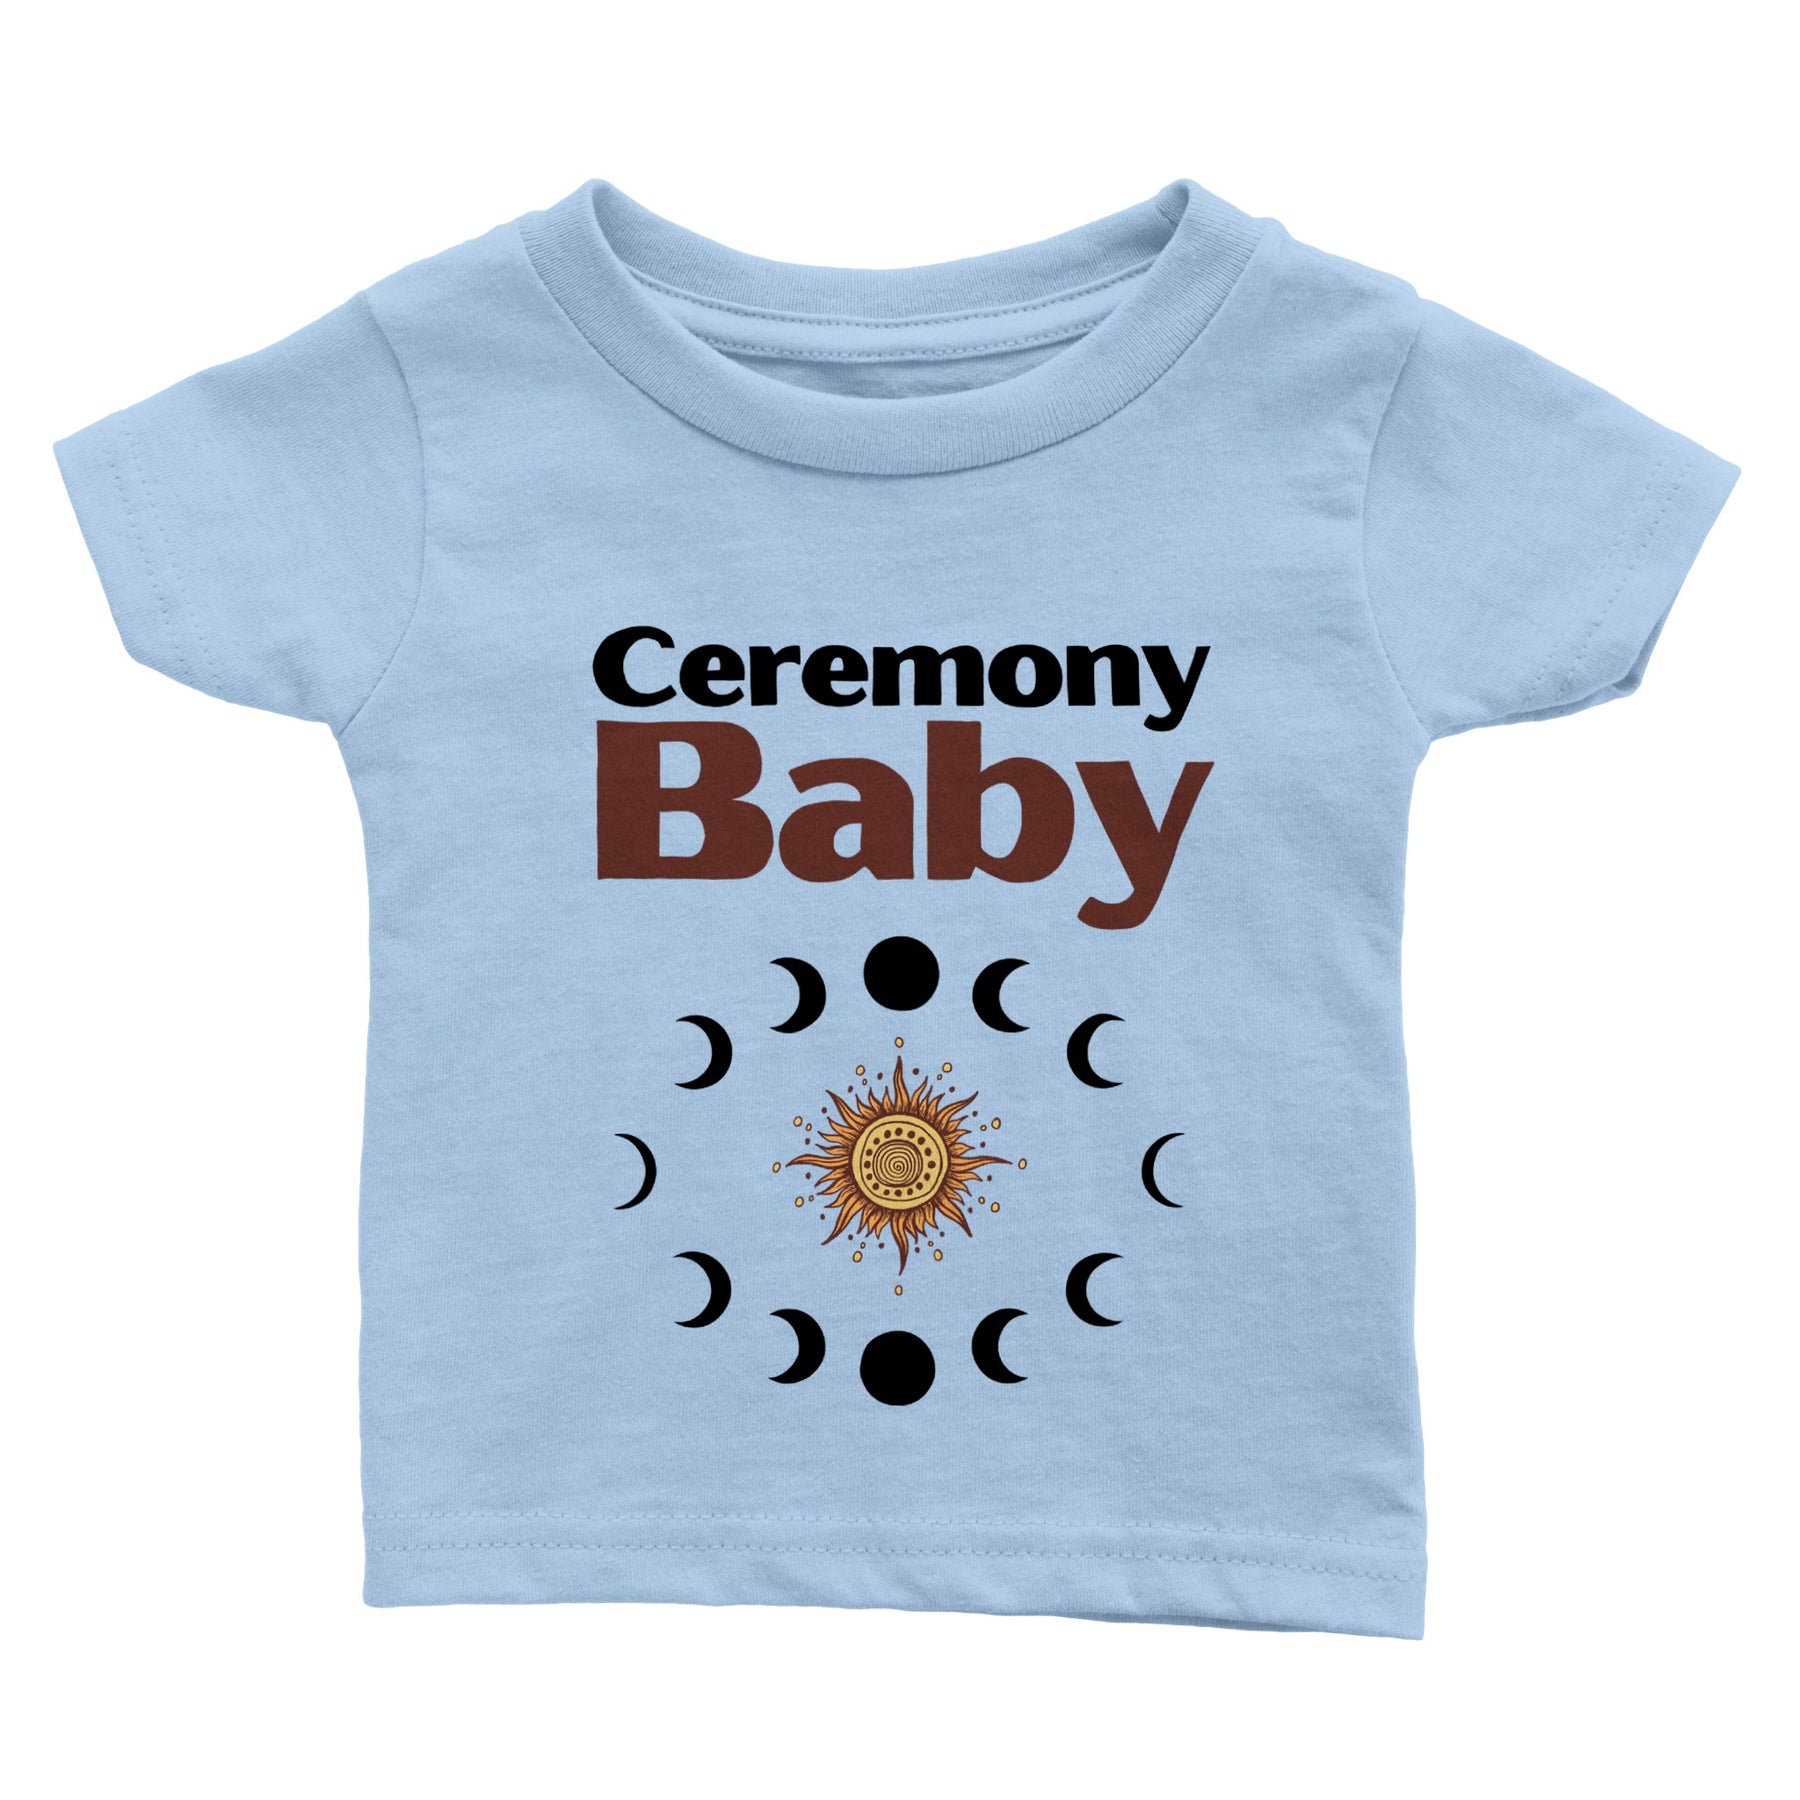 Ceremony Baby- T-shirt